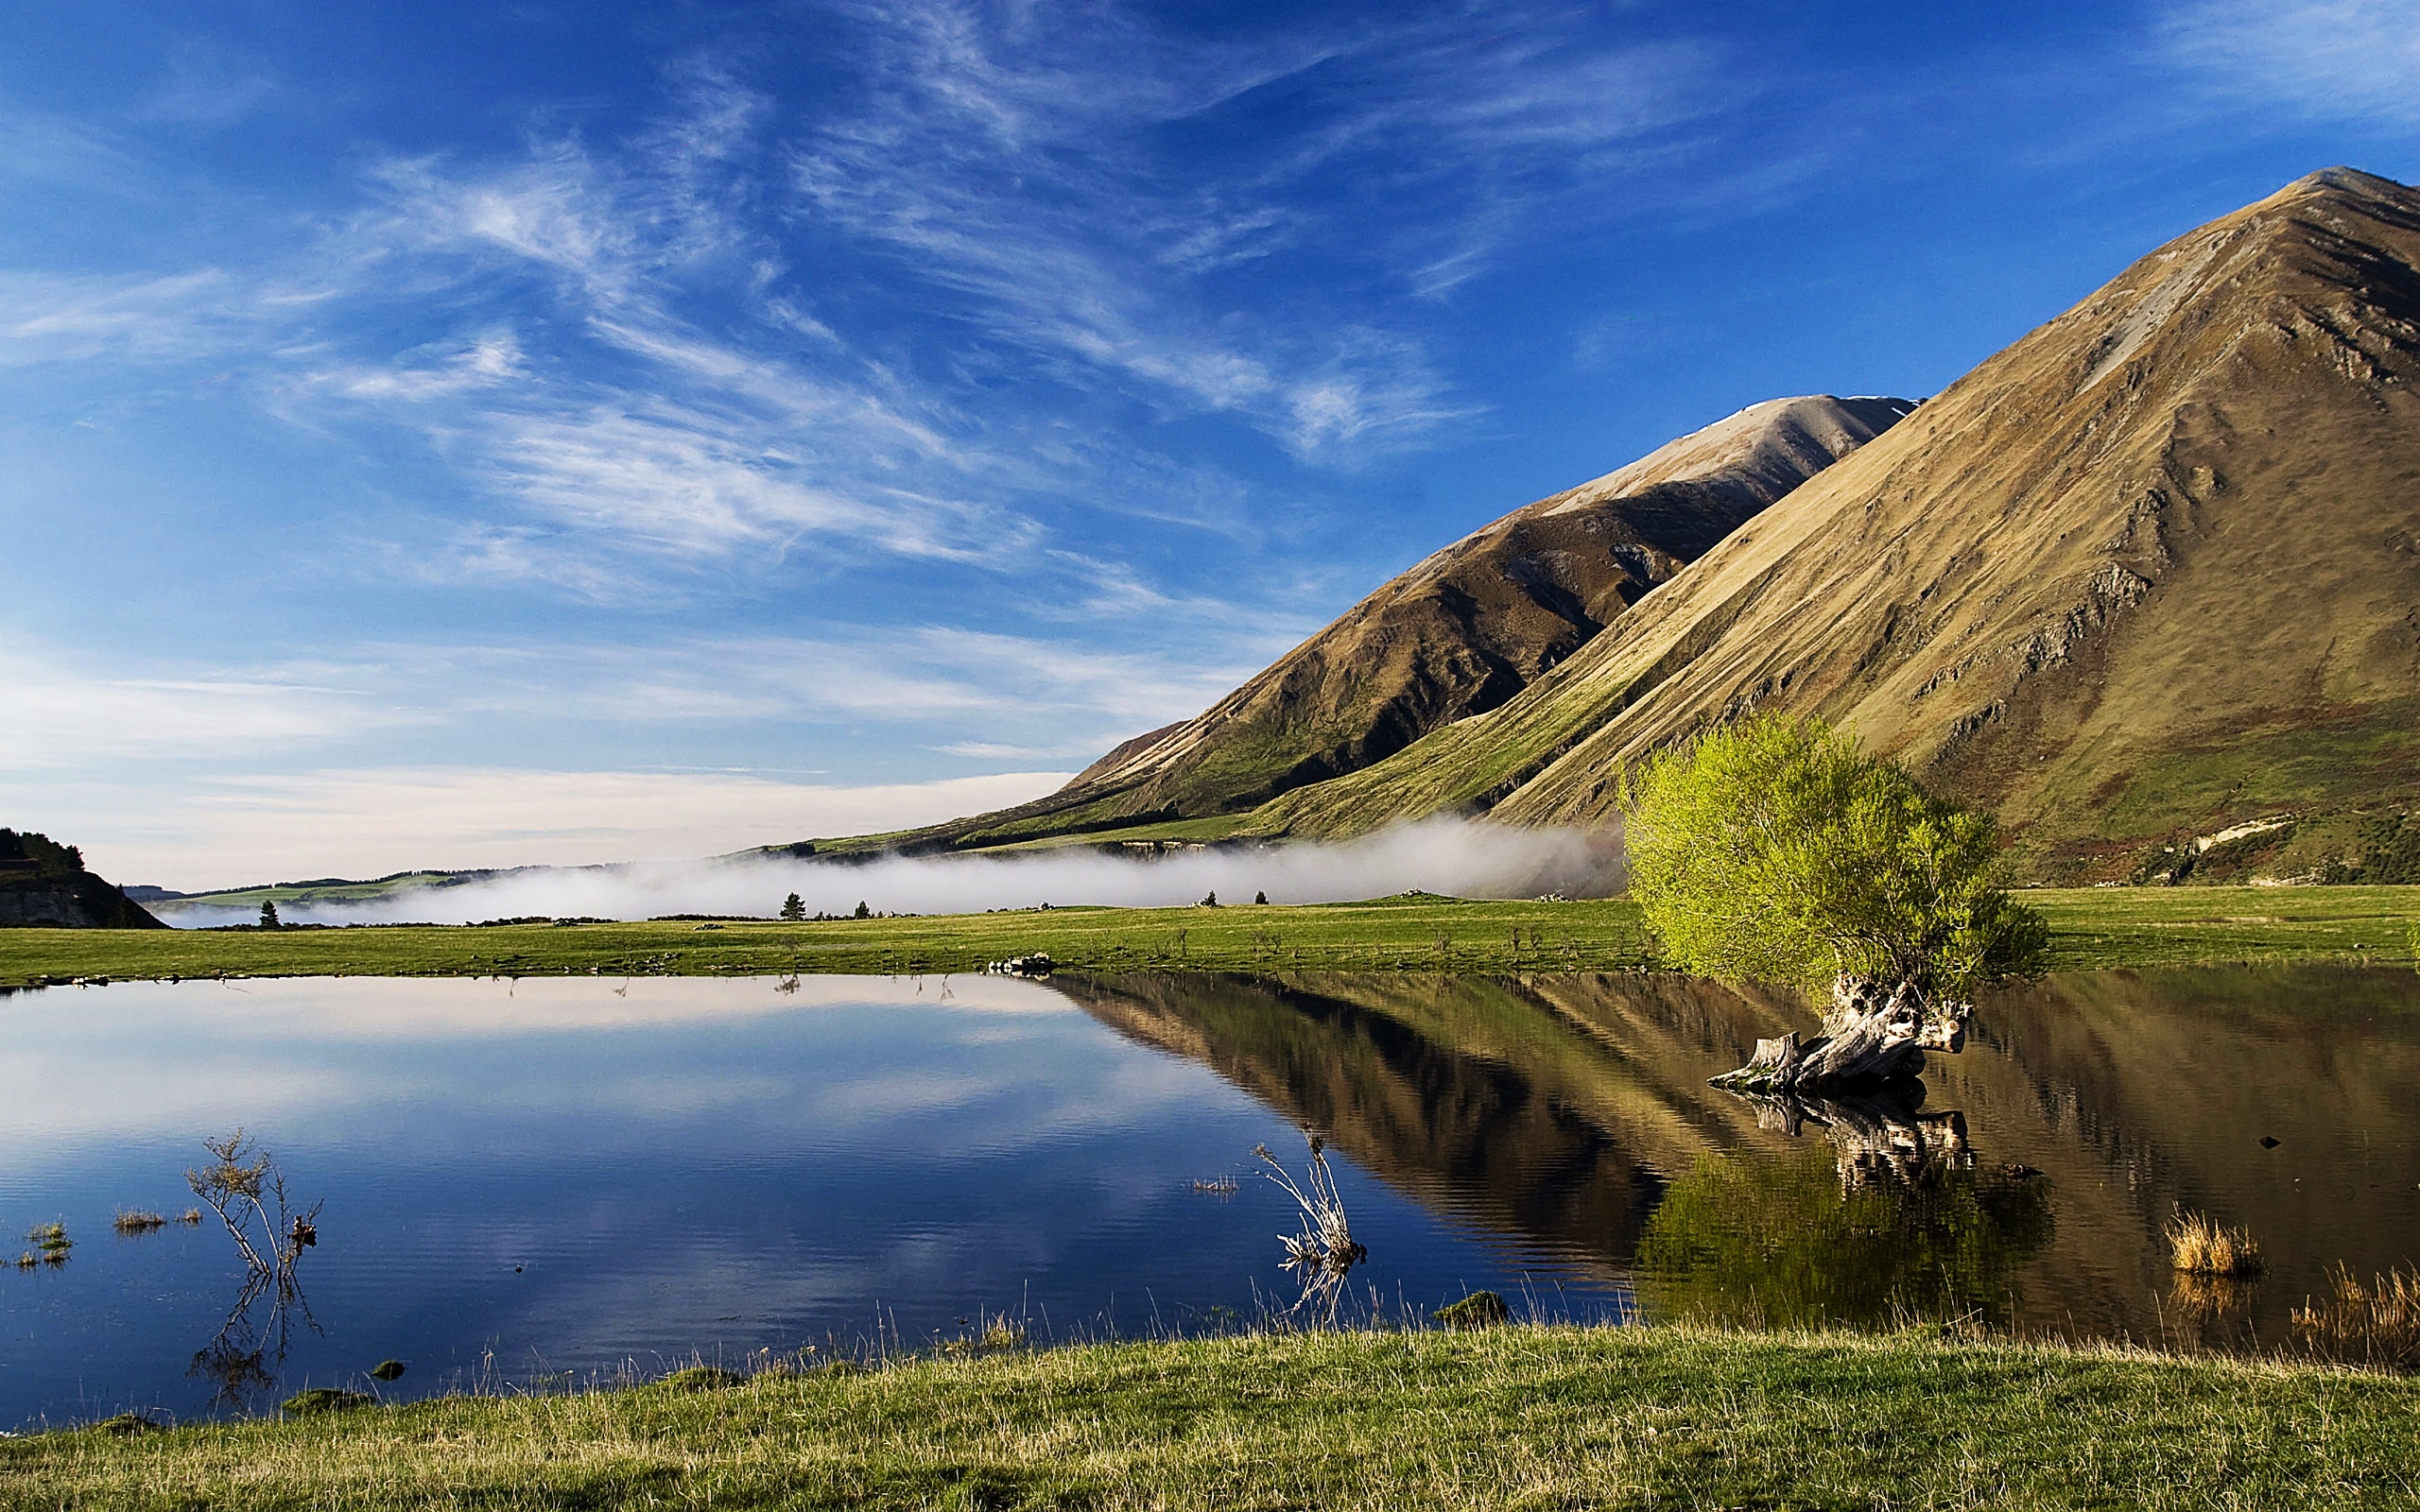 Lake Coleridge New Zealand Wallpaper in jpg format for free download